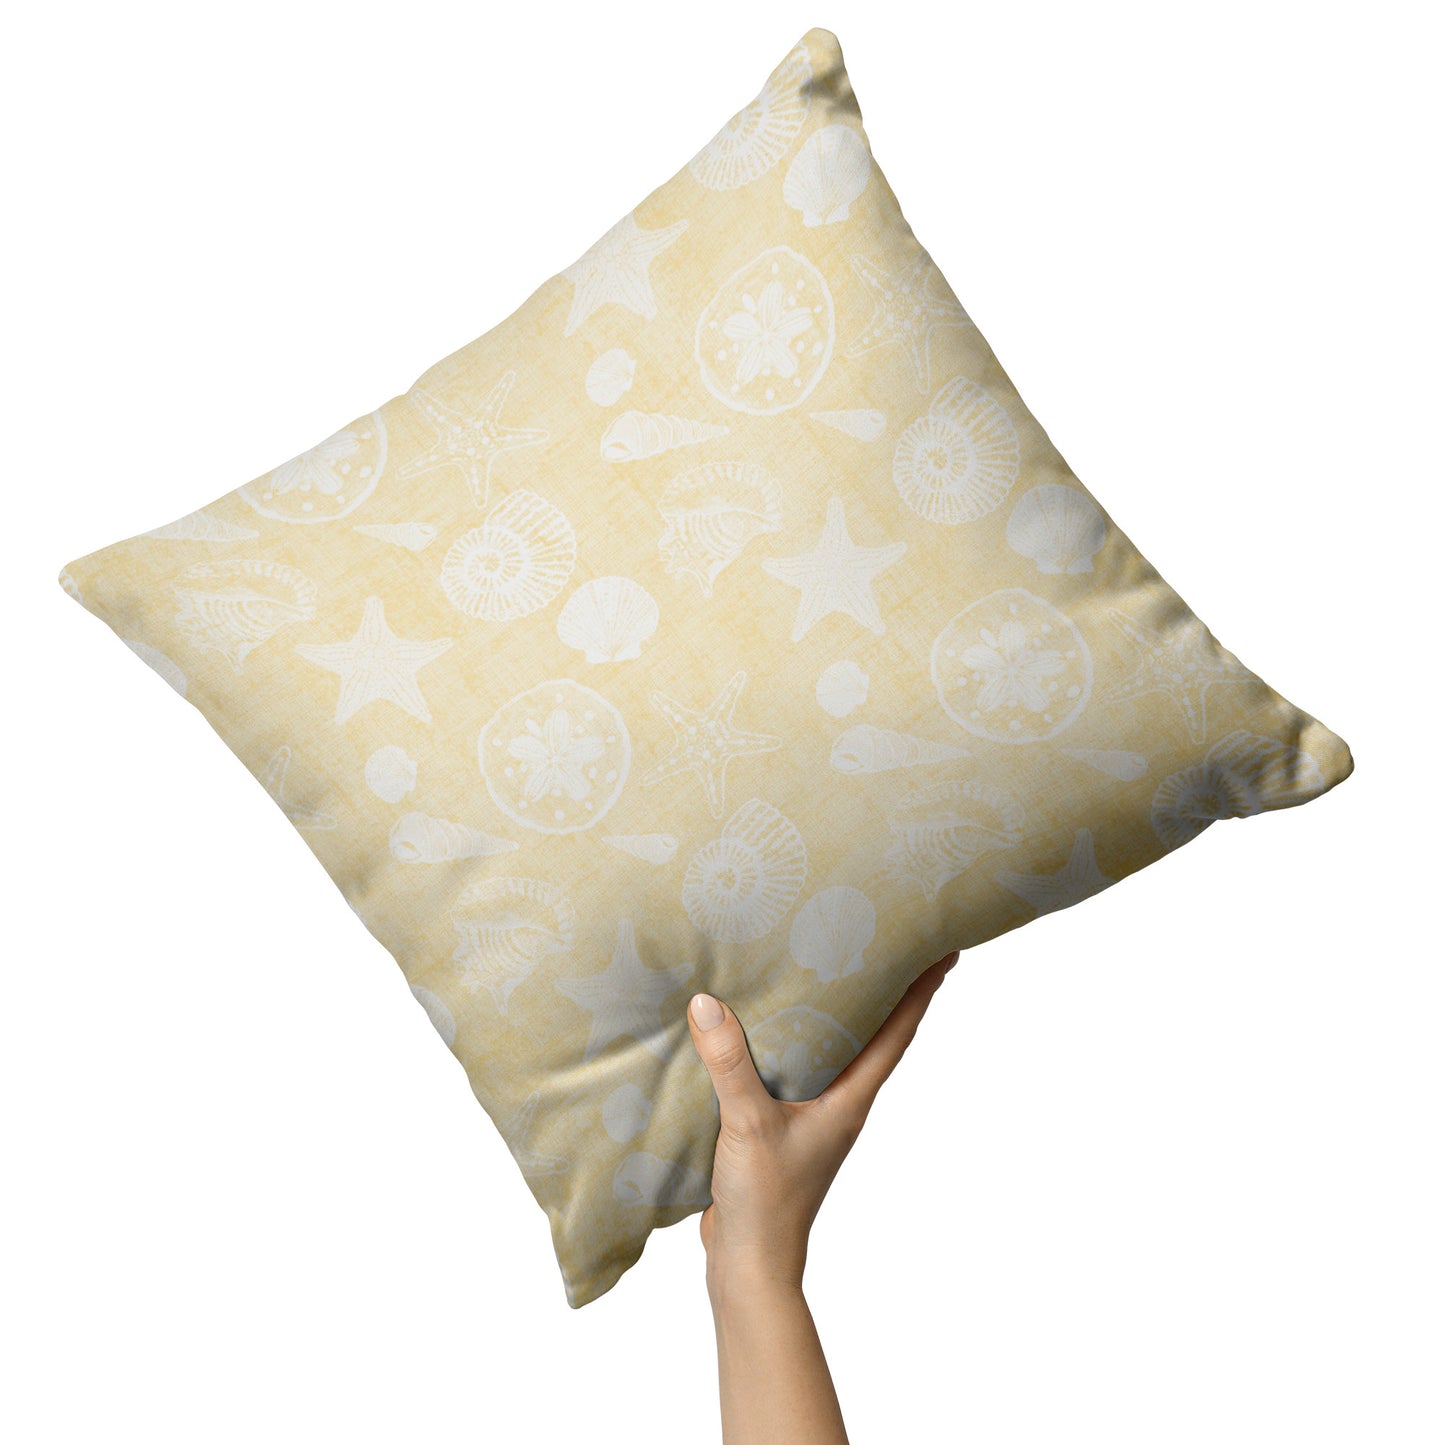 Seashell Sketches on Yellow Linen Texture Background, Throw Pillow